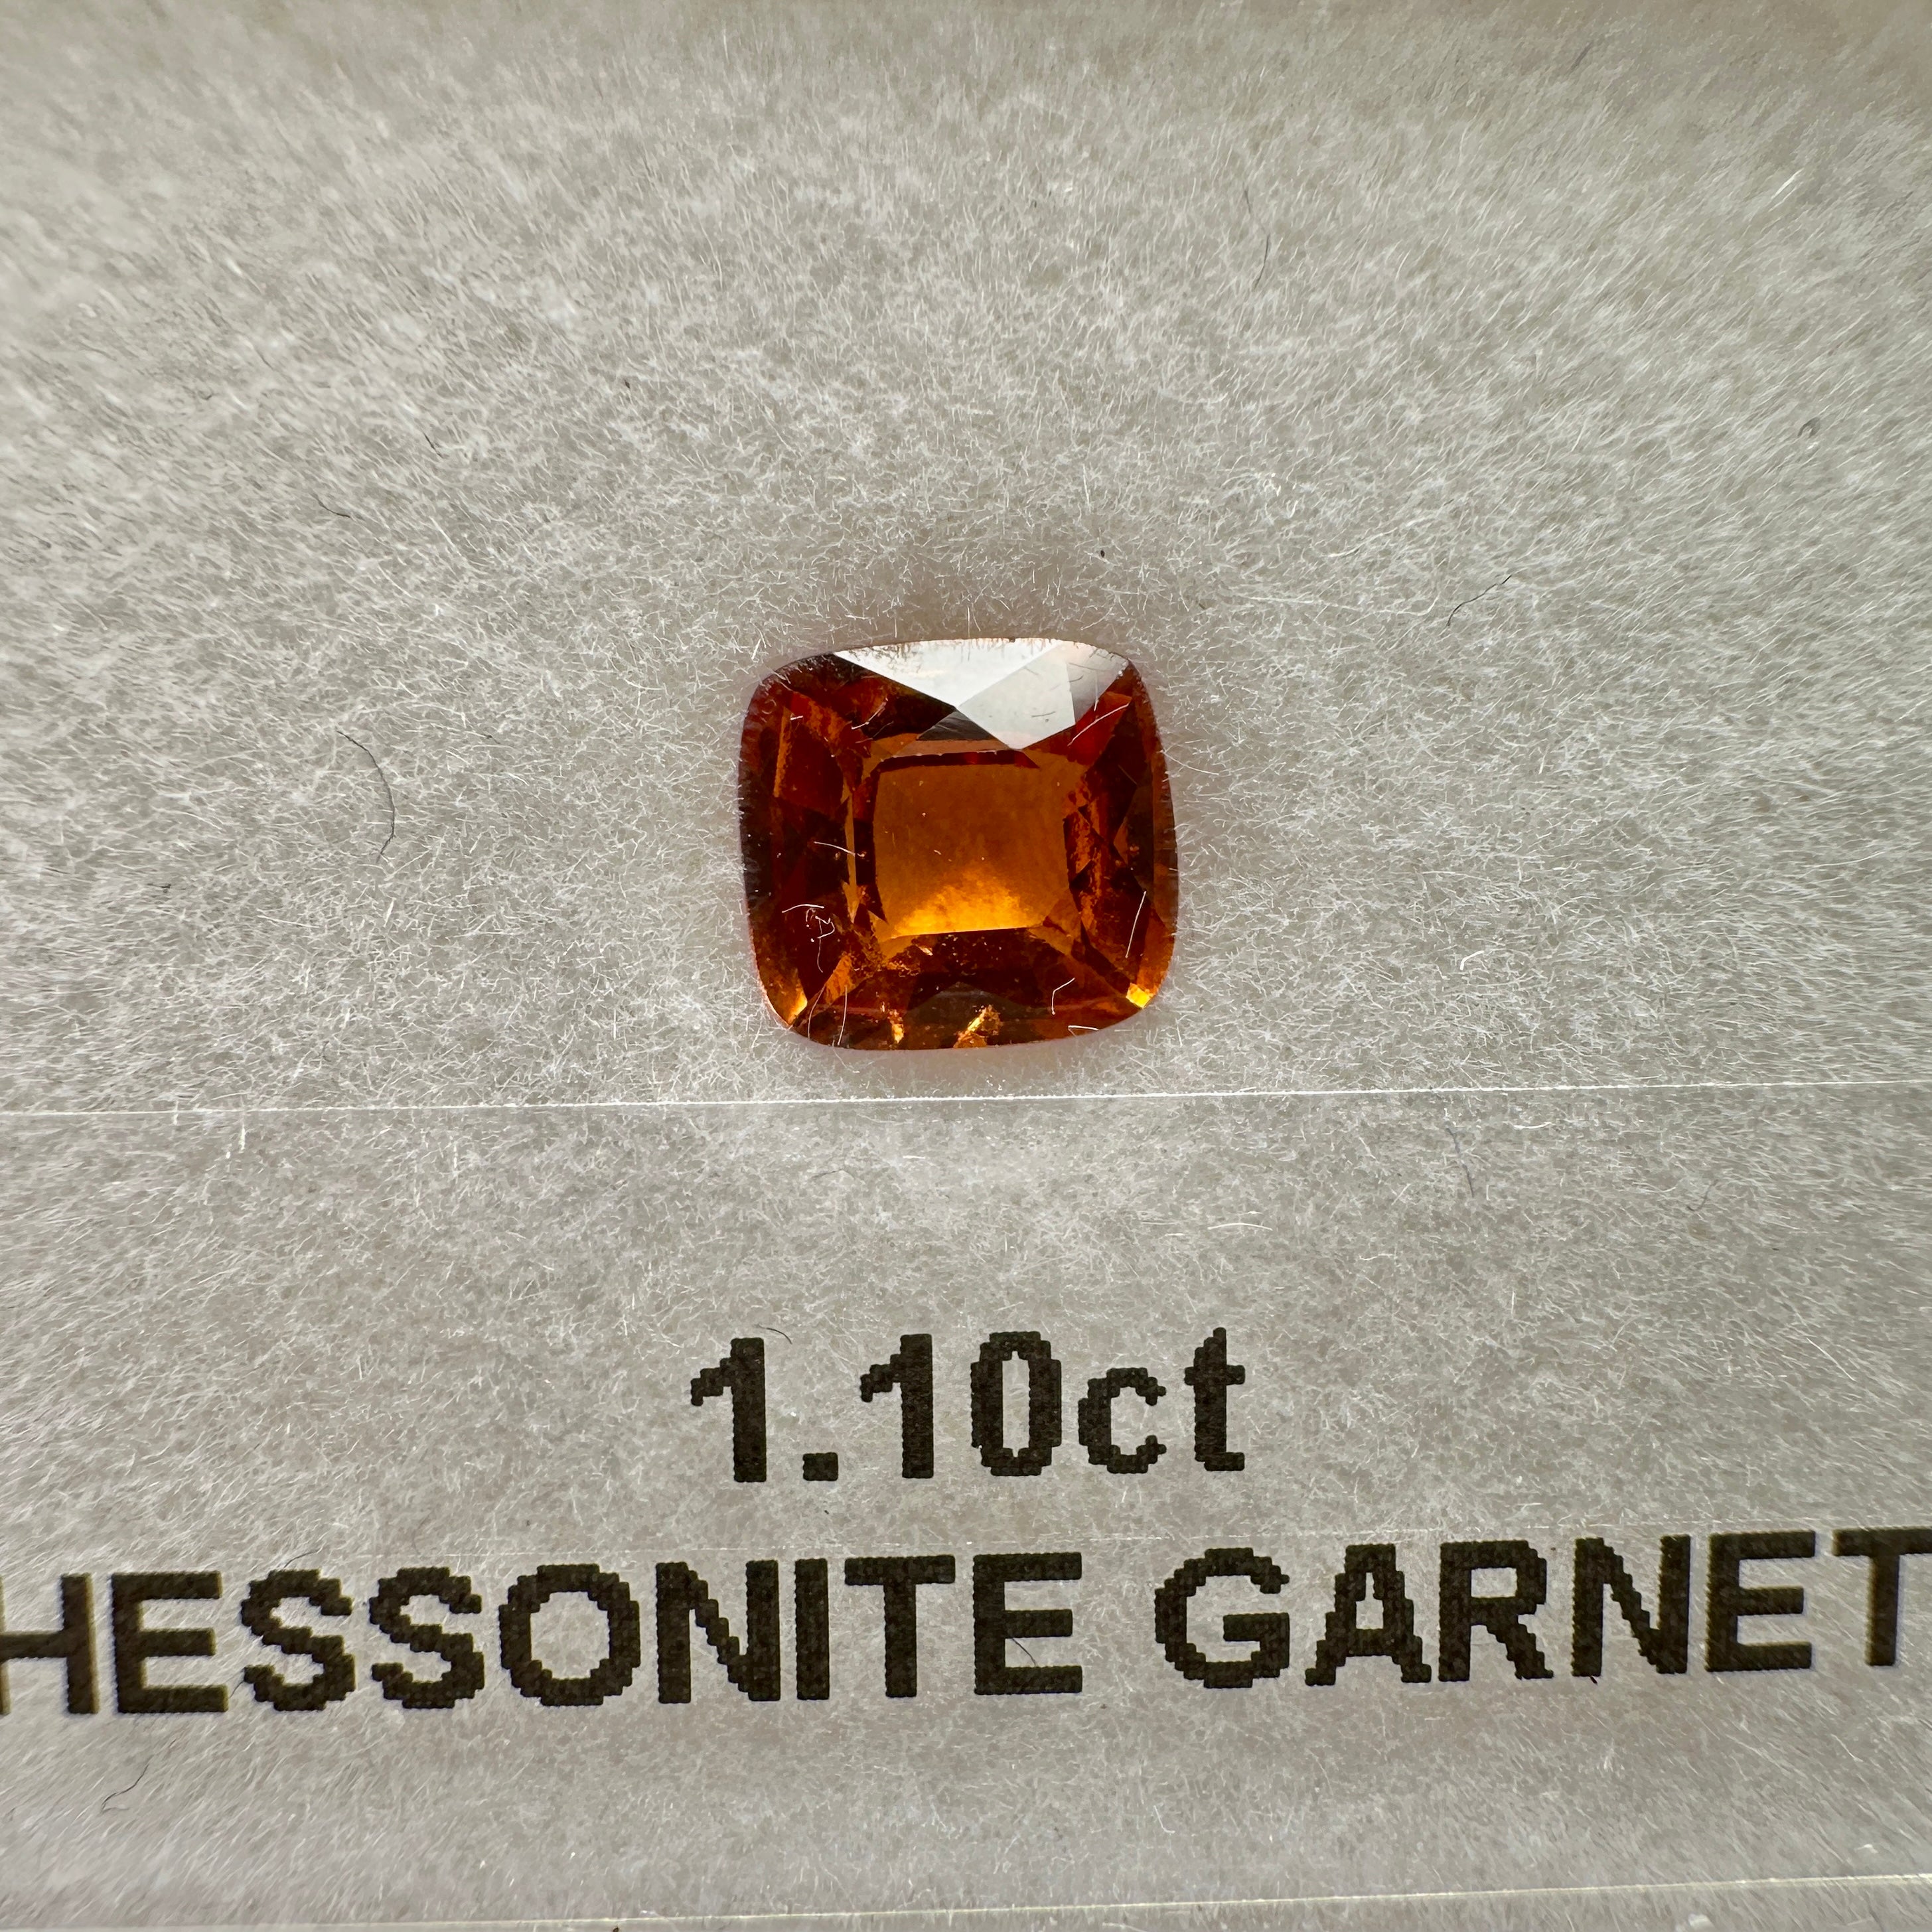 1.10ct Hessonite Garnet, Untreated Unheated, native cut